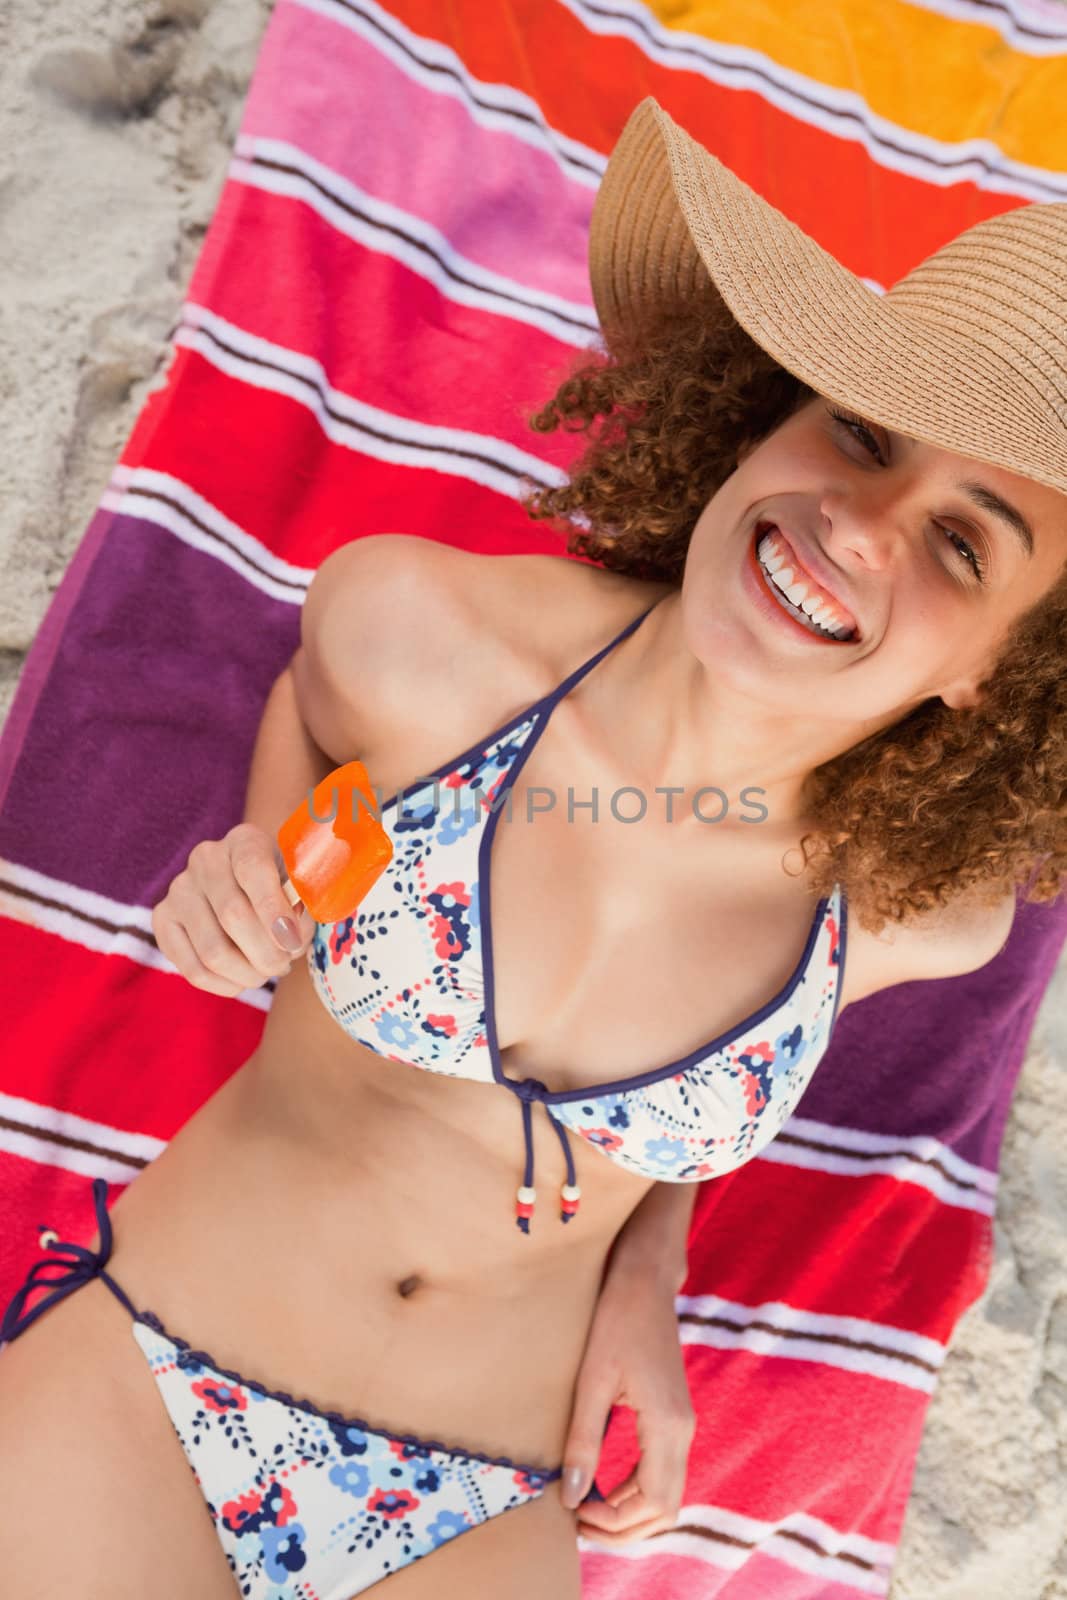 Overhead view of an attractive woman in bikini holding a delicious orange ice cream